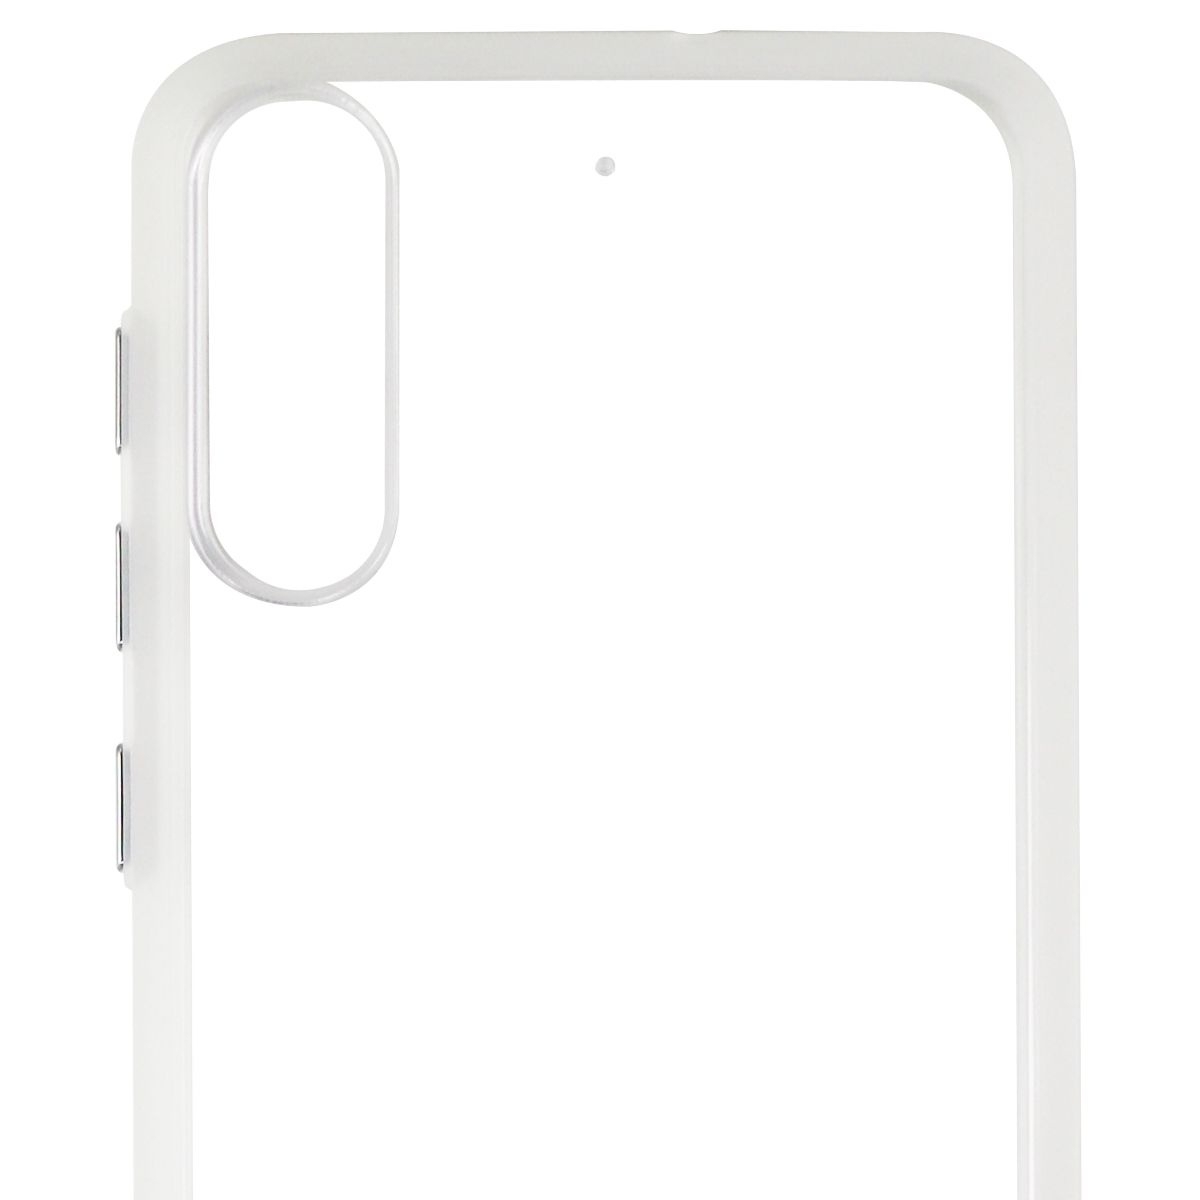 PureGear Slim Shell Series Case For Samsung Galaxy A50 - Clear